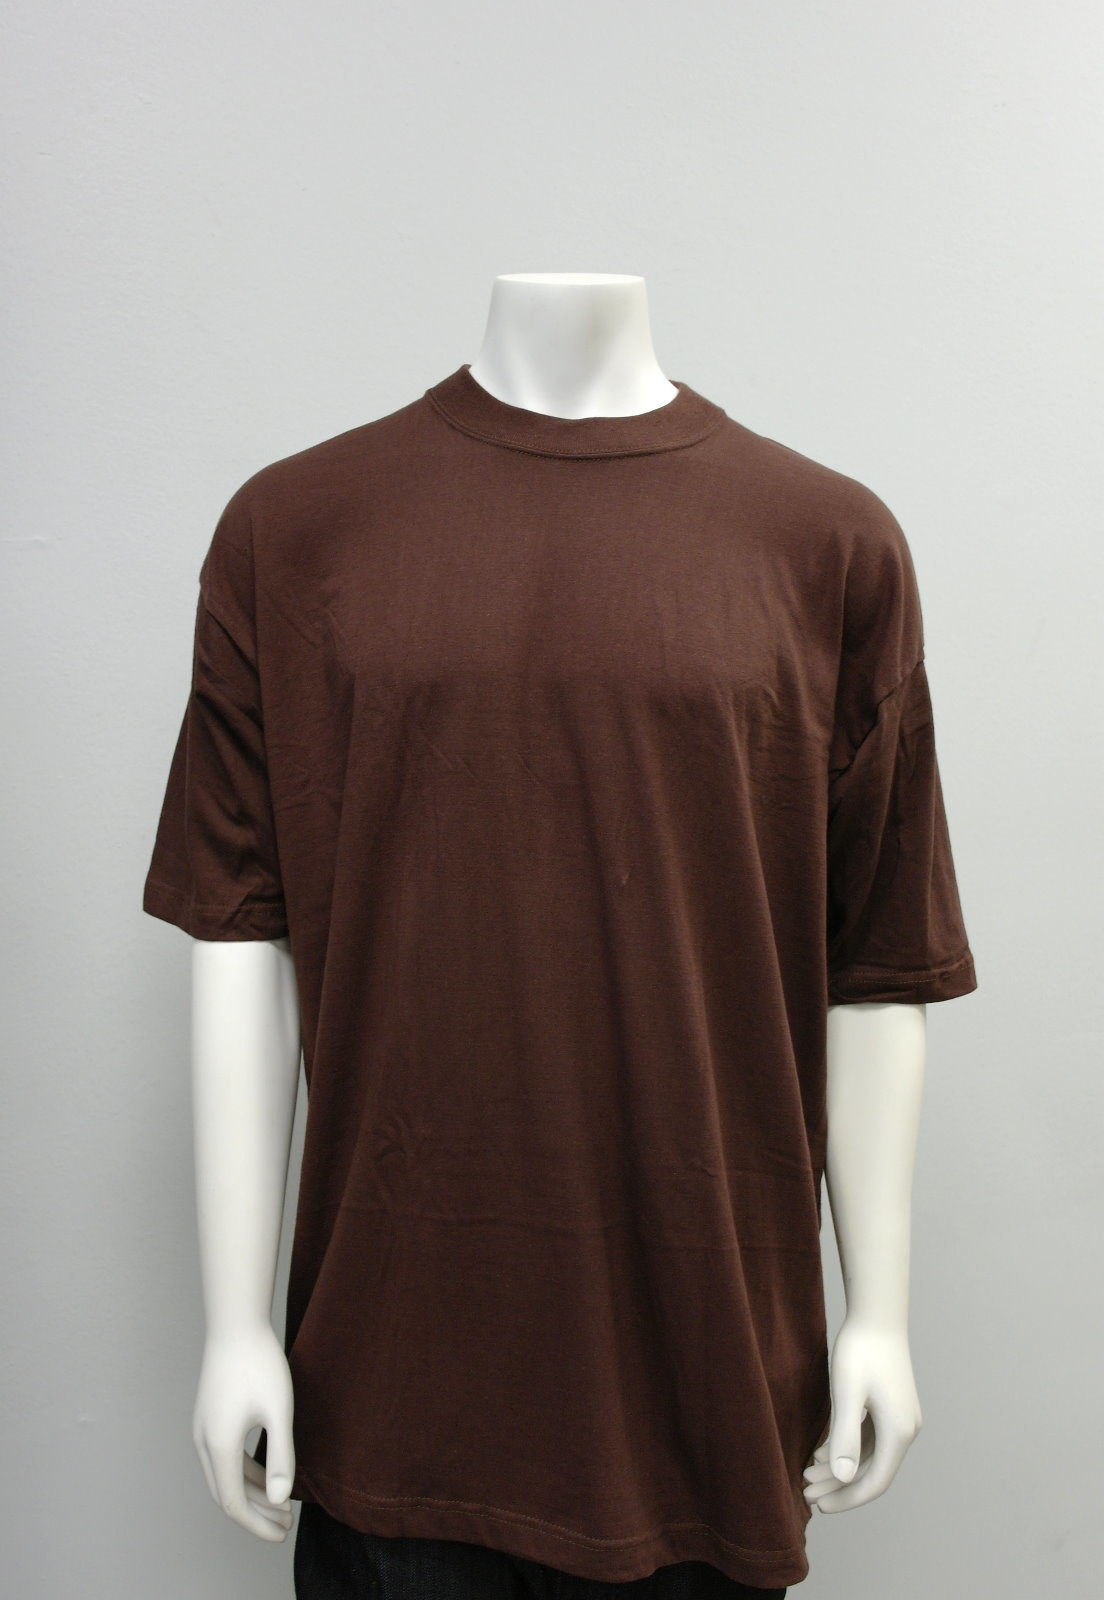 Gemrock Plain Brown Shirt Crew-neck 100% Best Quality Cotton